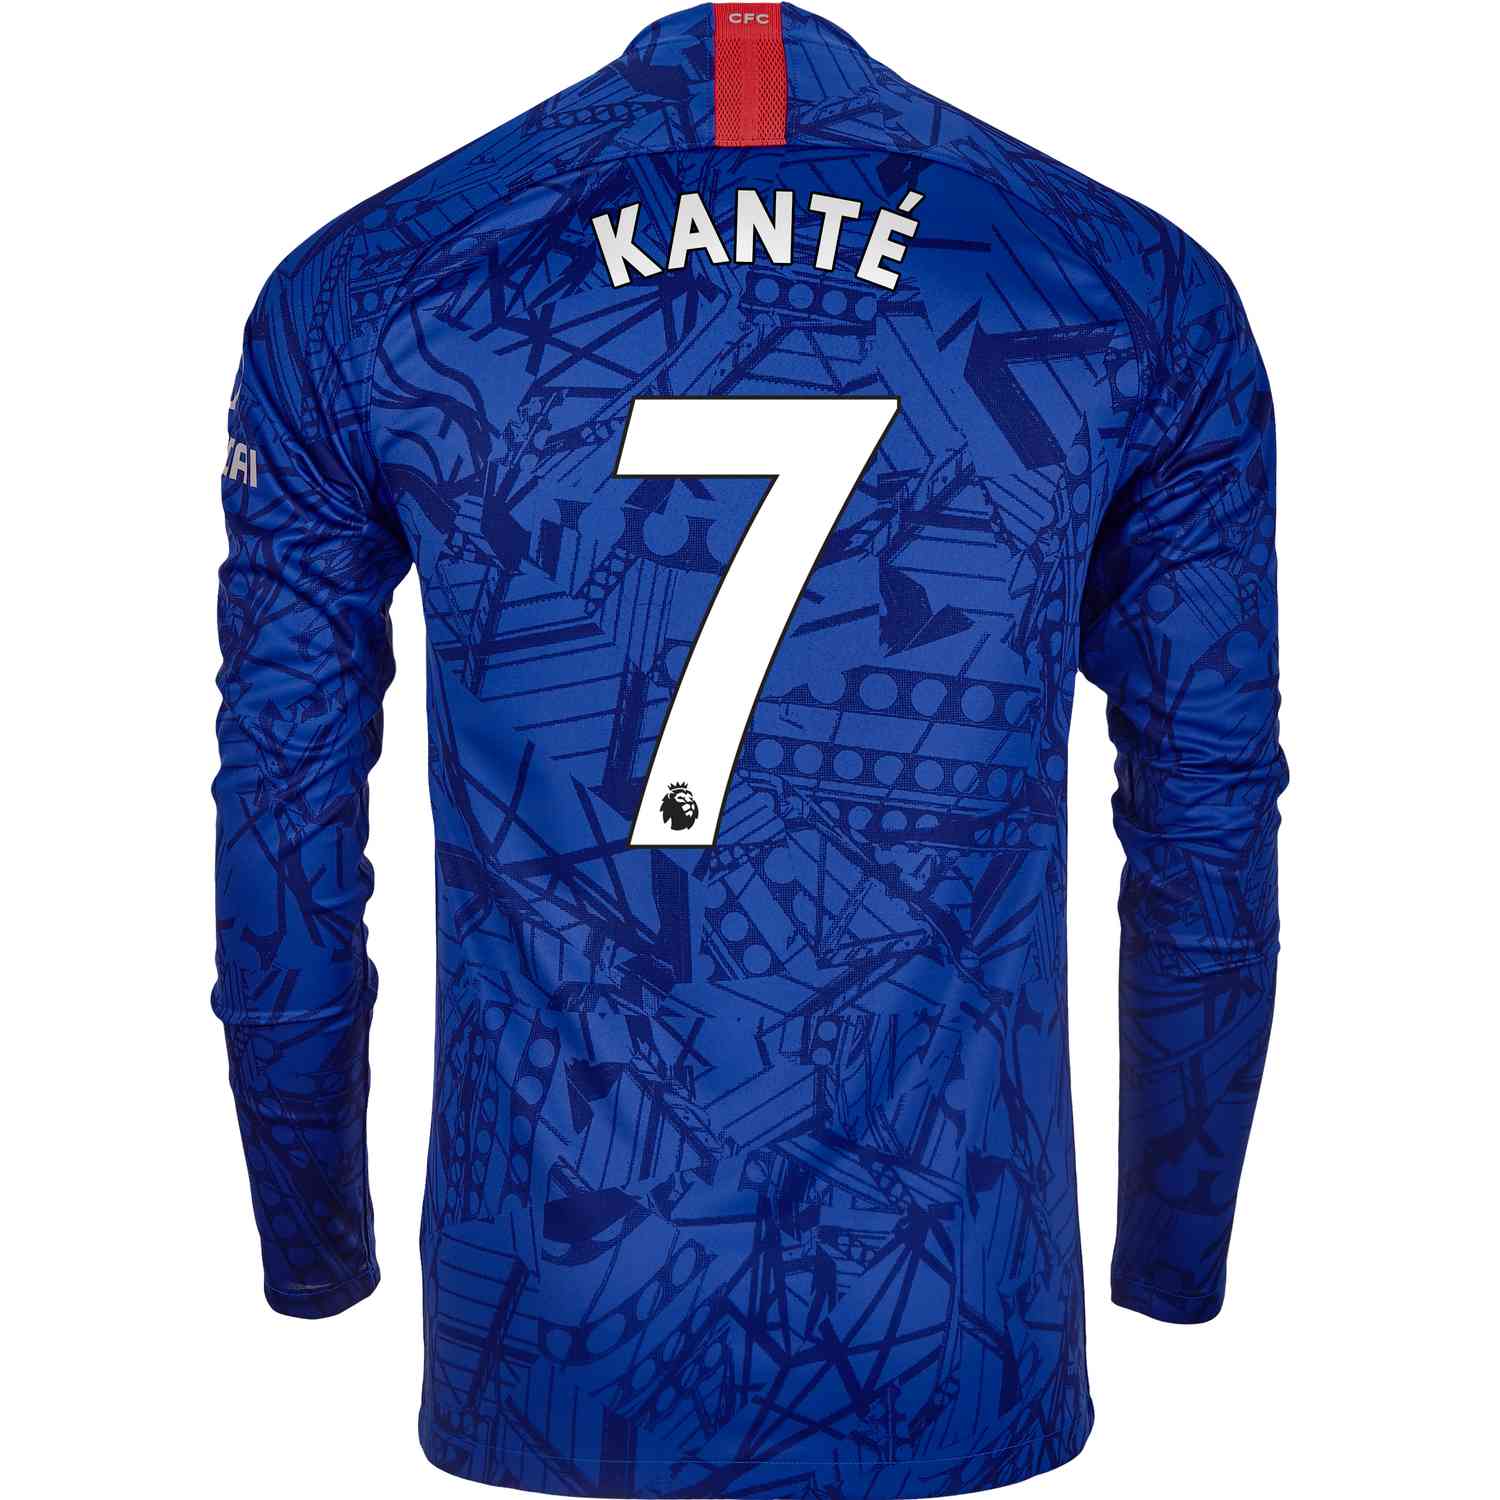 2019/20 Nike N'Golo Kante Chelsea L/S 